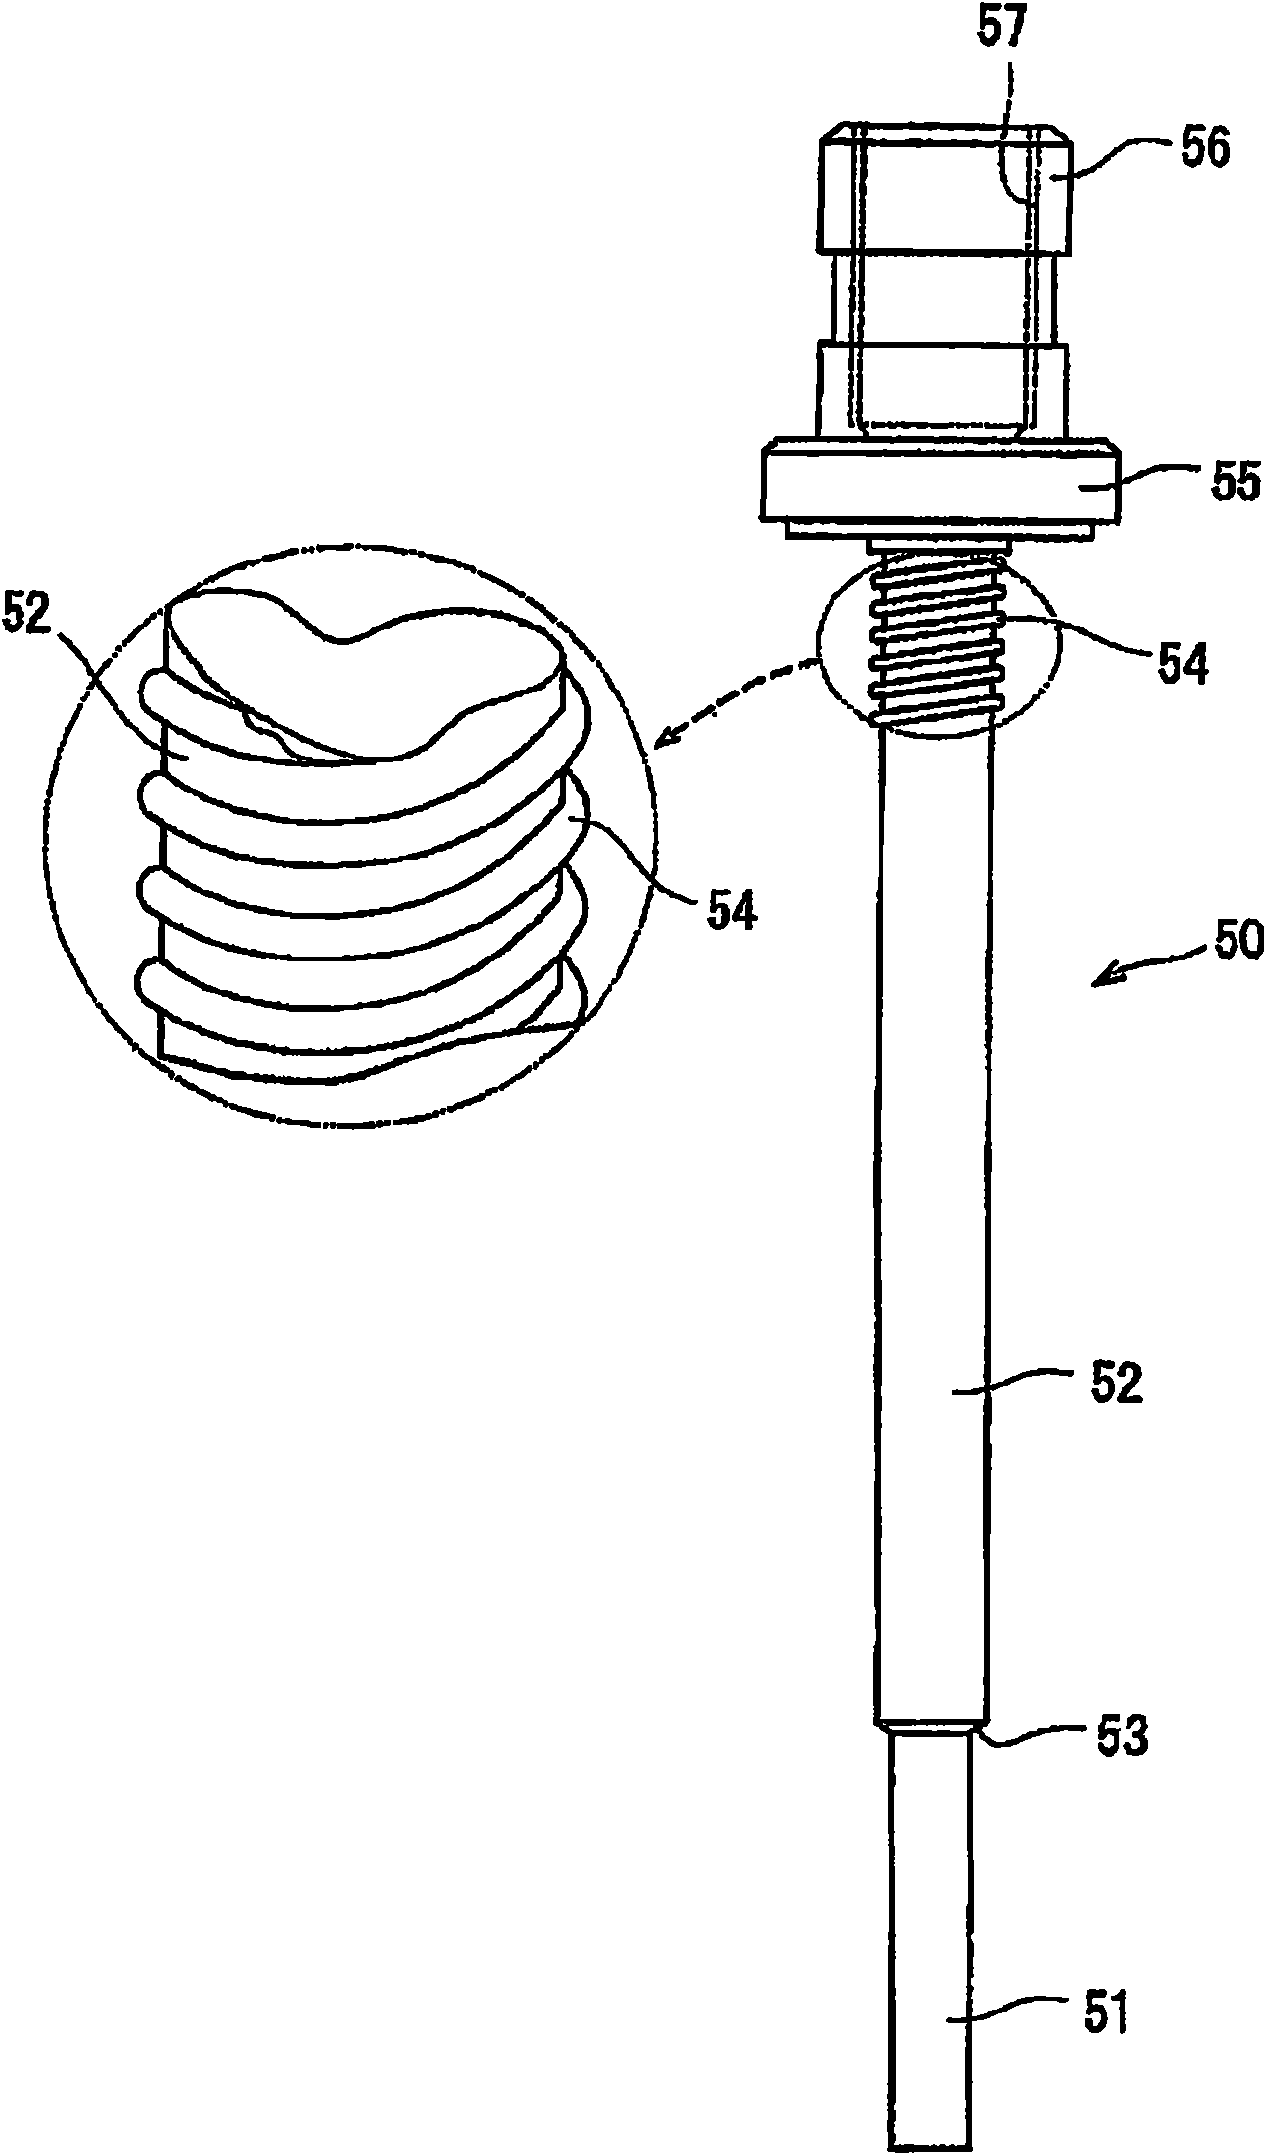 Insulator for spark plug, and method for manufacturing spark plug